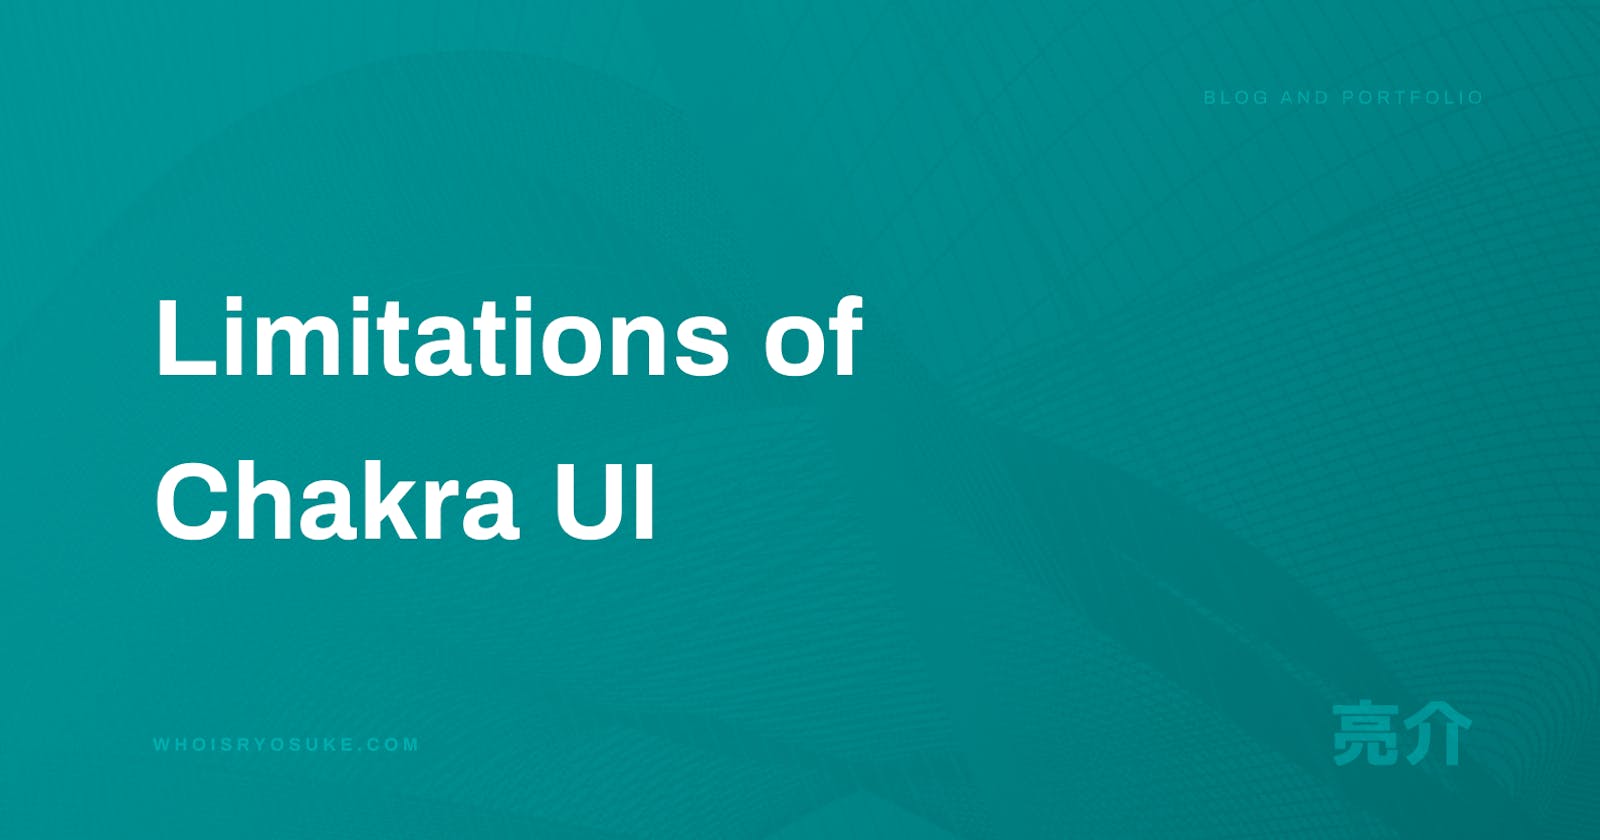 Limitations of Chakra UI